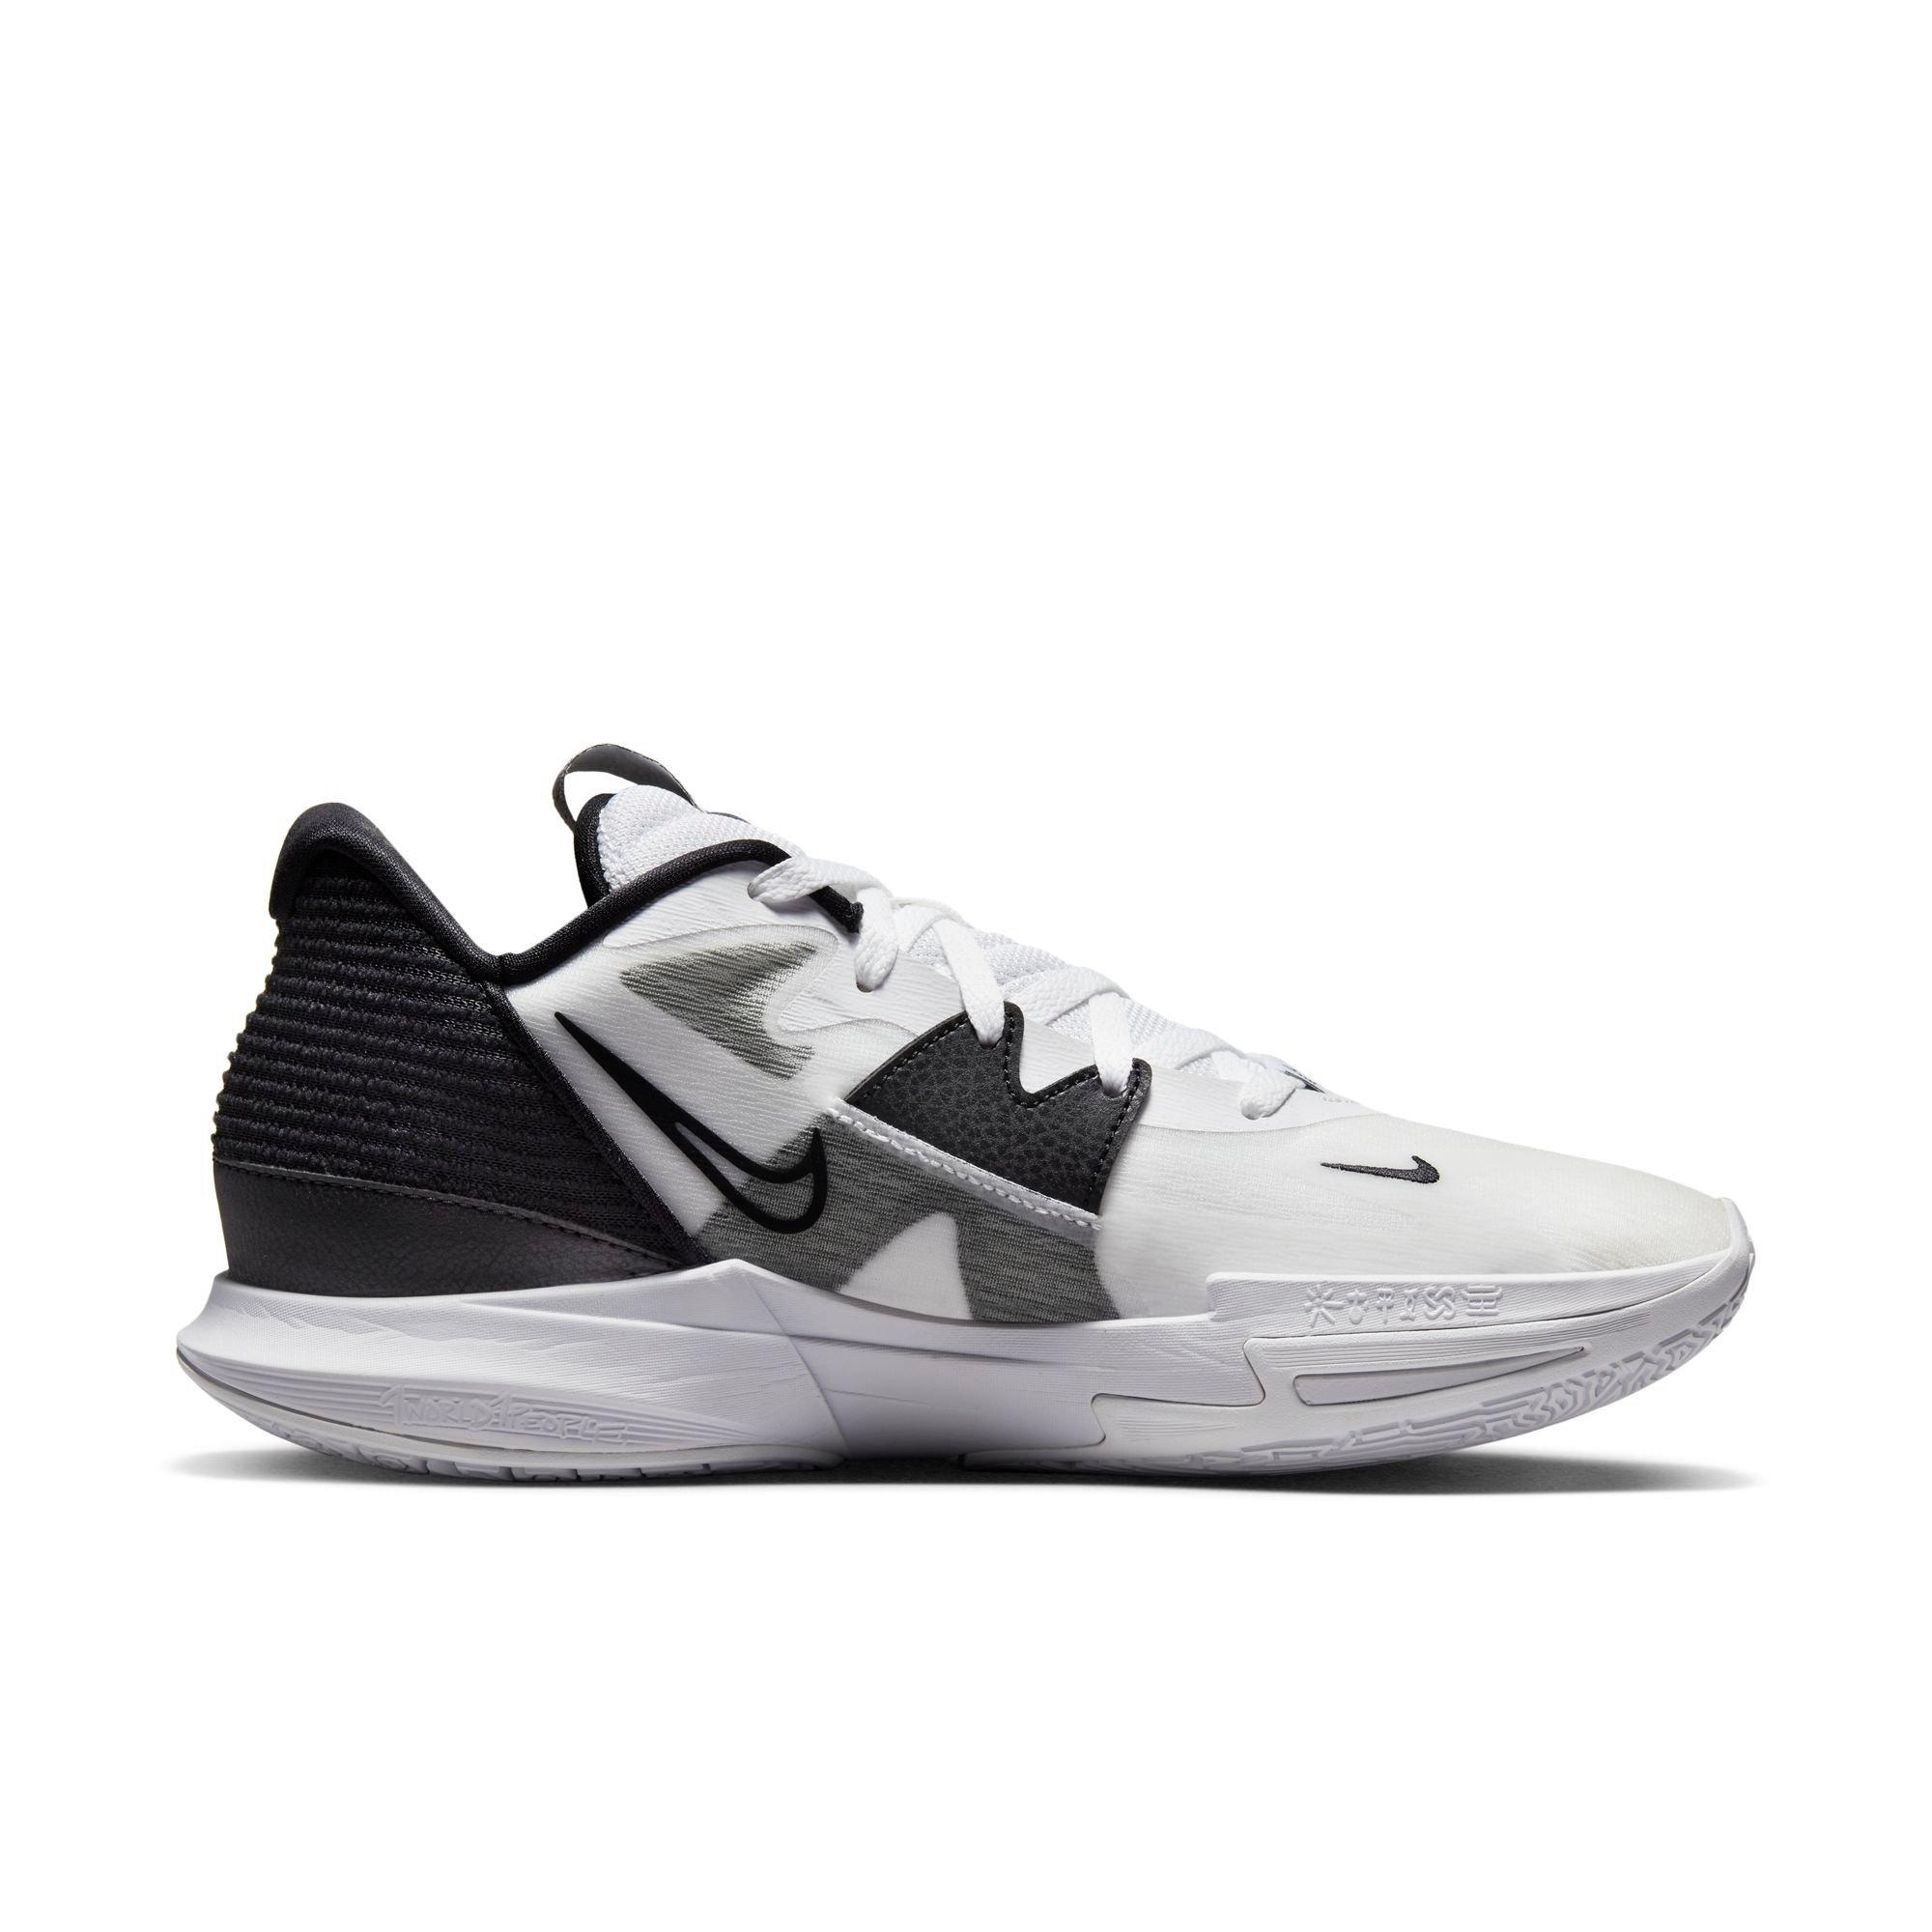 Nike Kyrie Low 4 - Mens Basketball Shoes - White/Black/White, Size 9.5